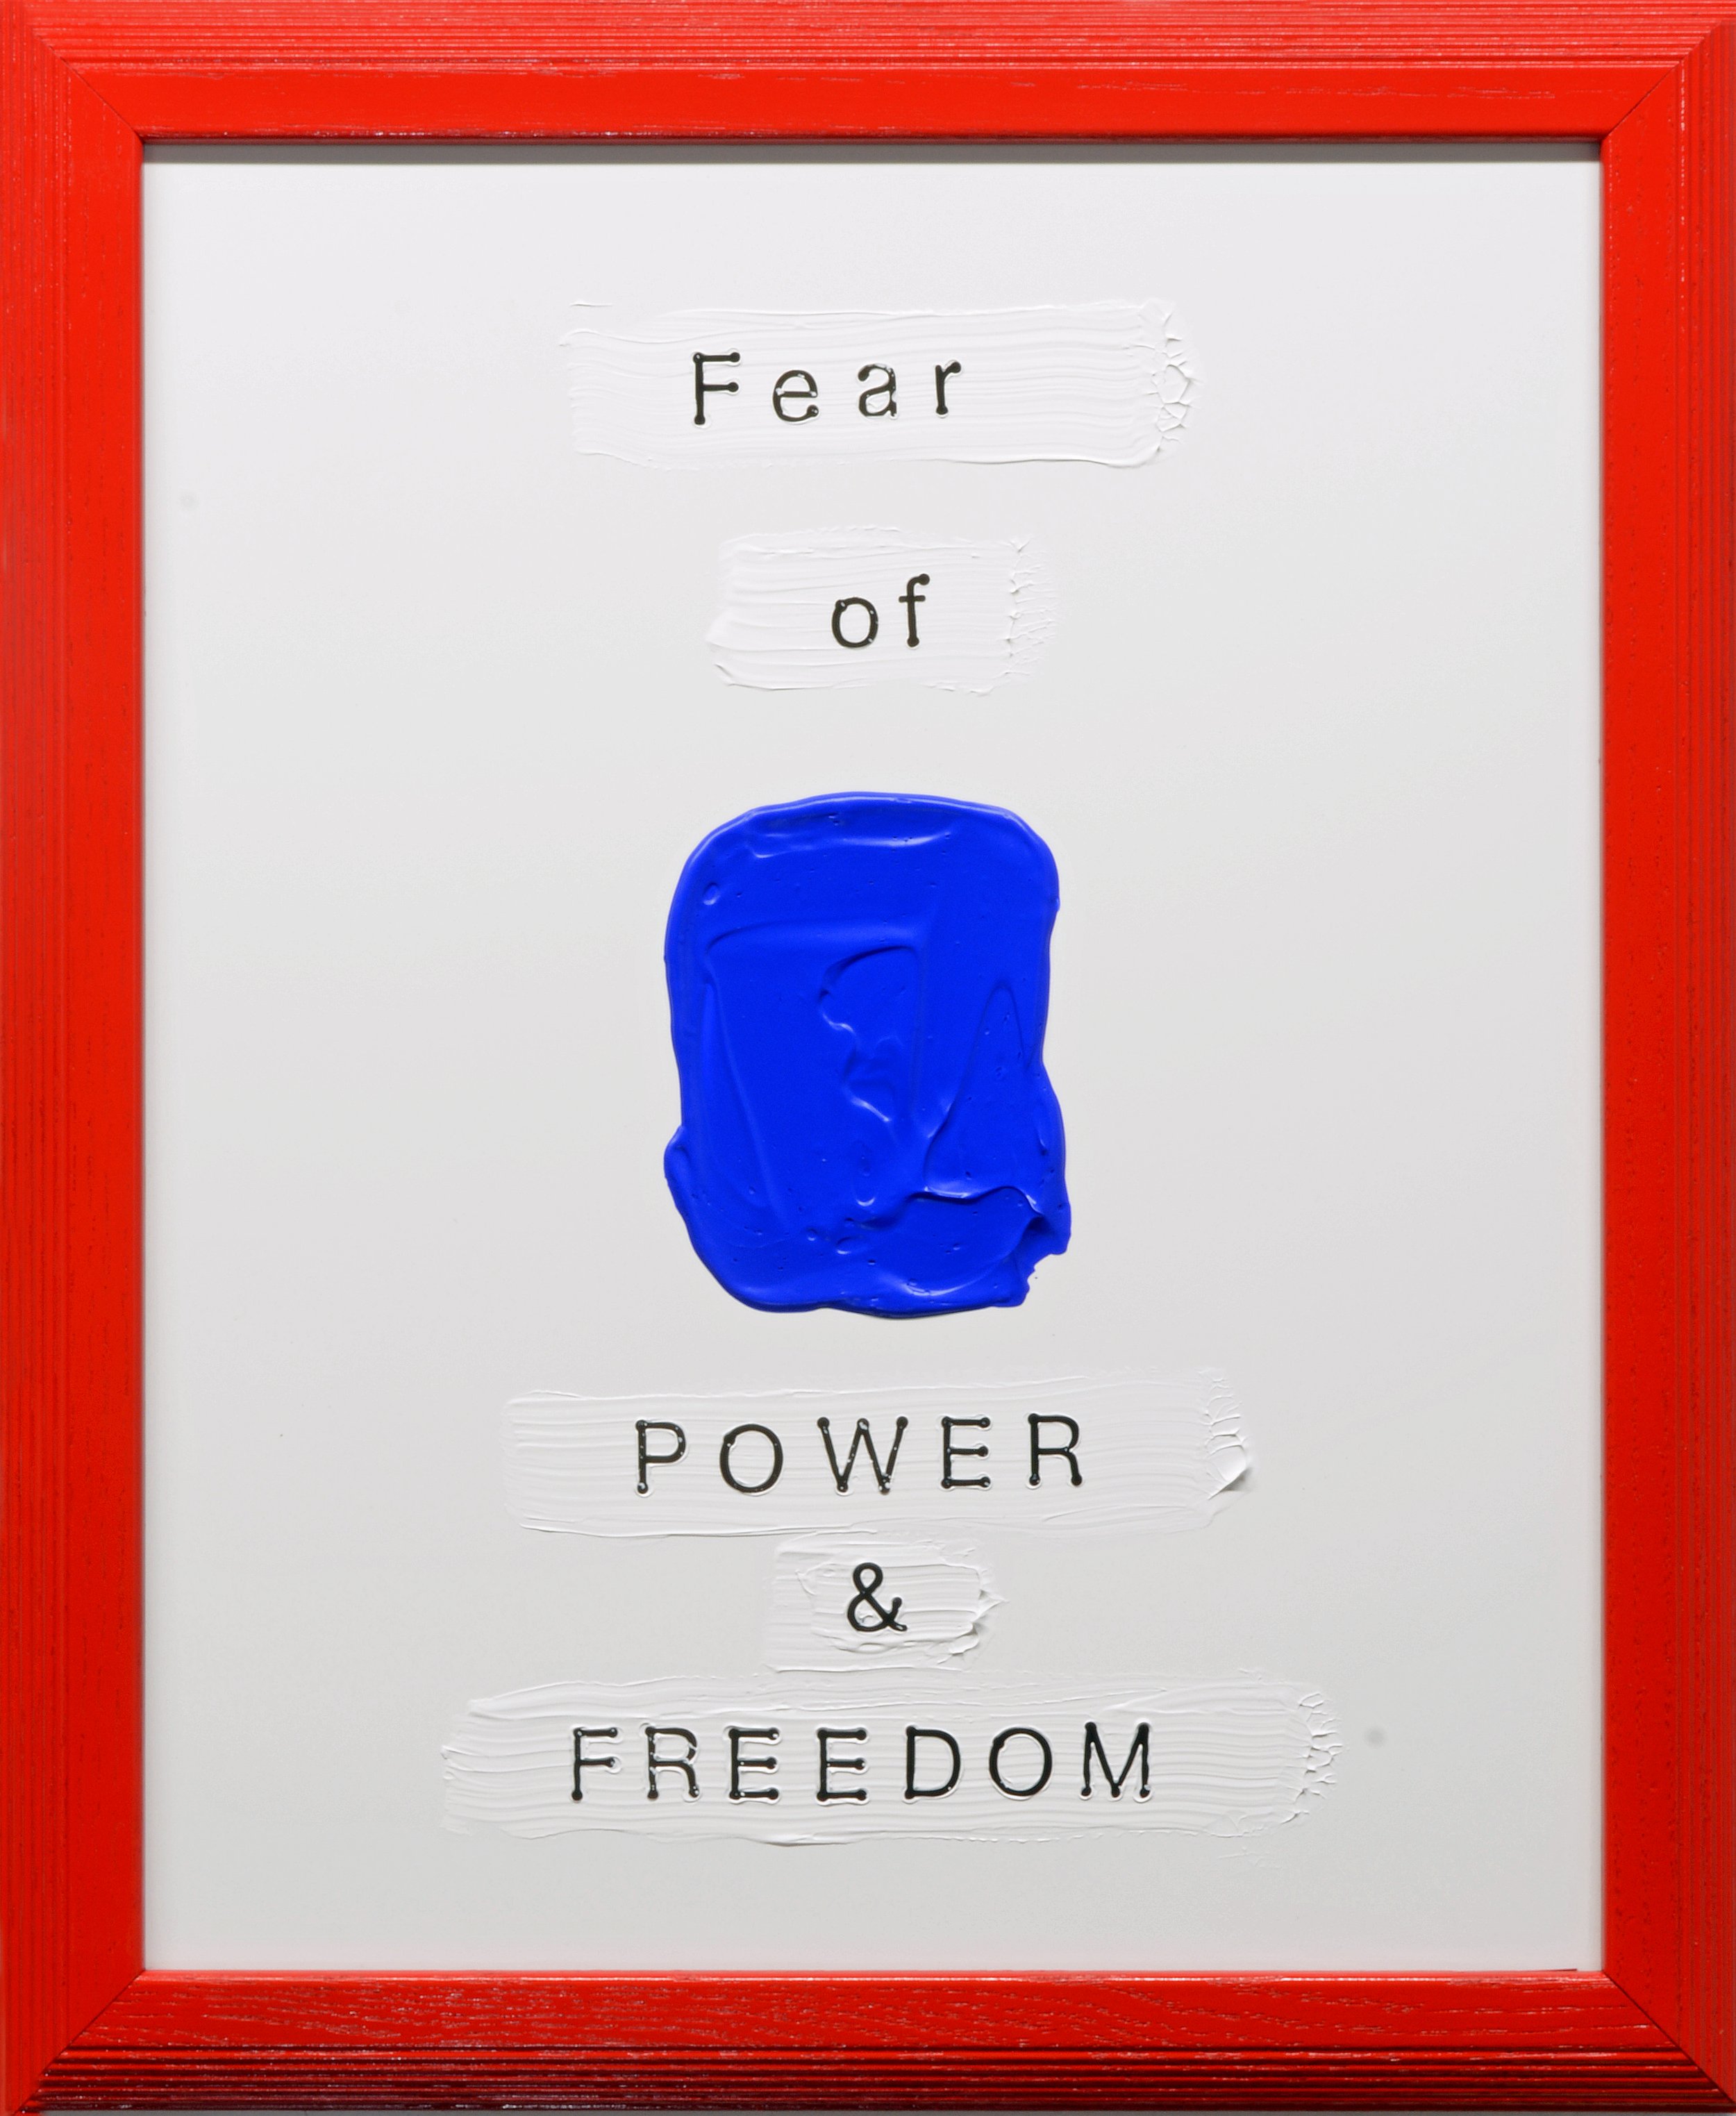 Fear of Power & Freedom